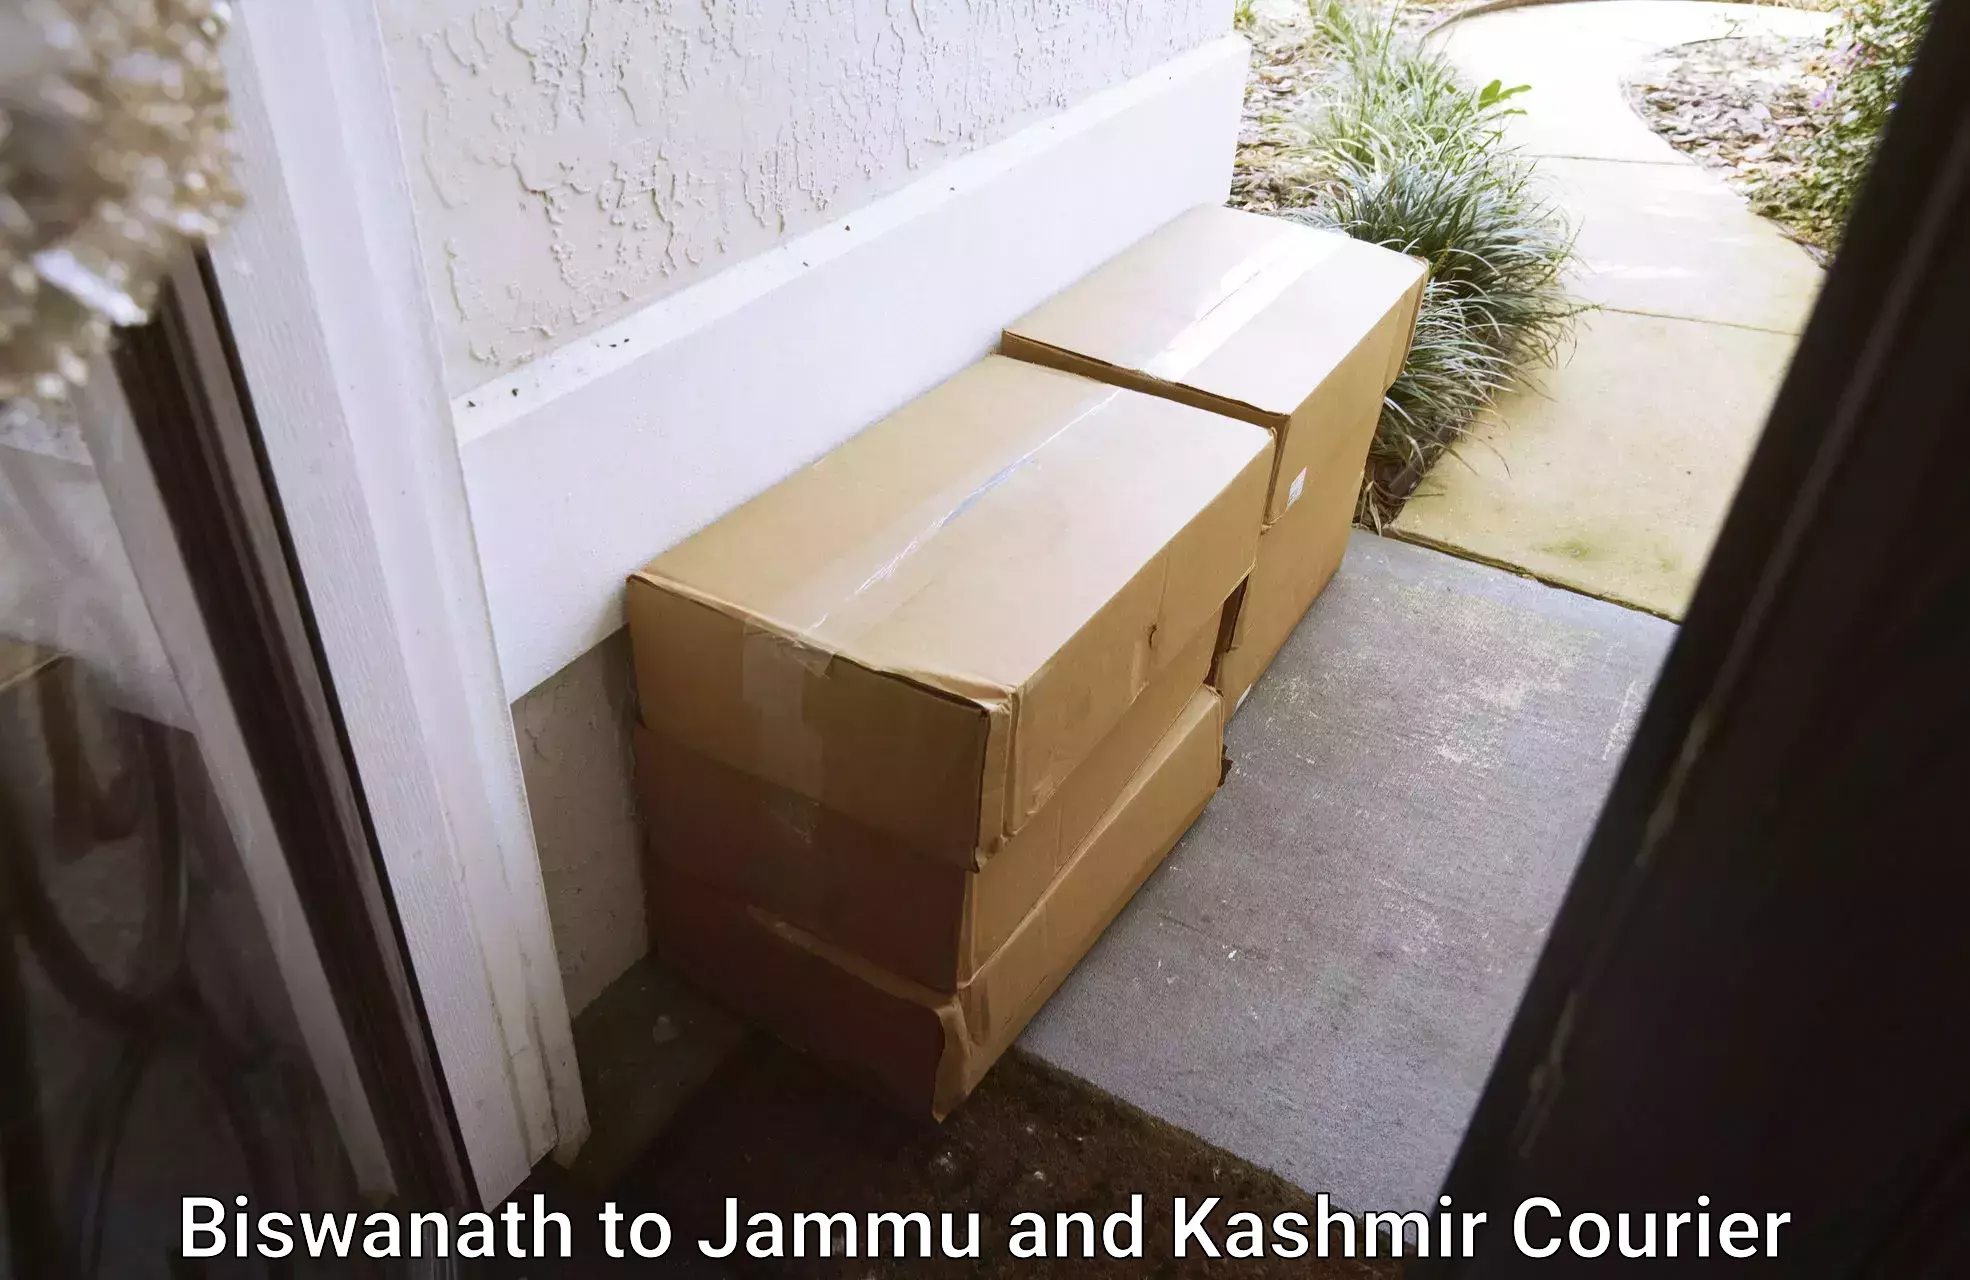 Quality courier services in Biswanath to Srinagar Kashmir